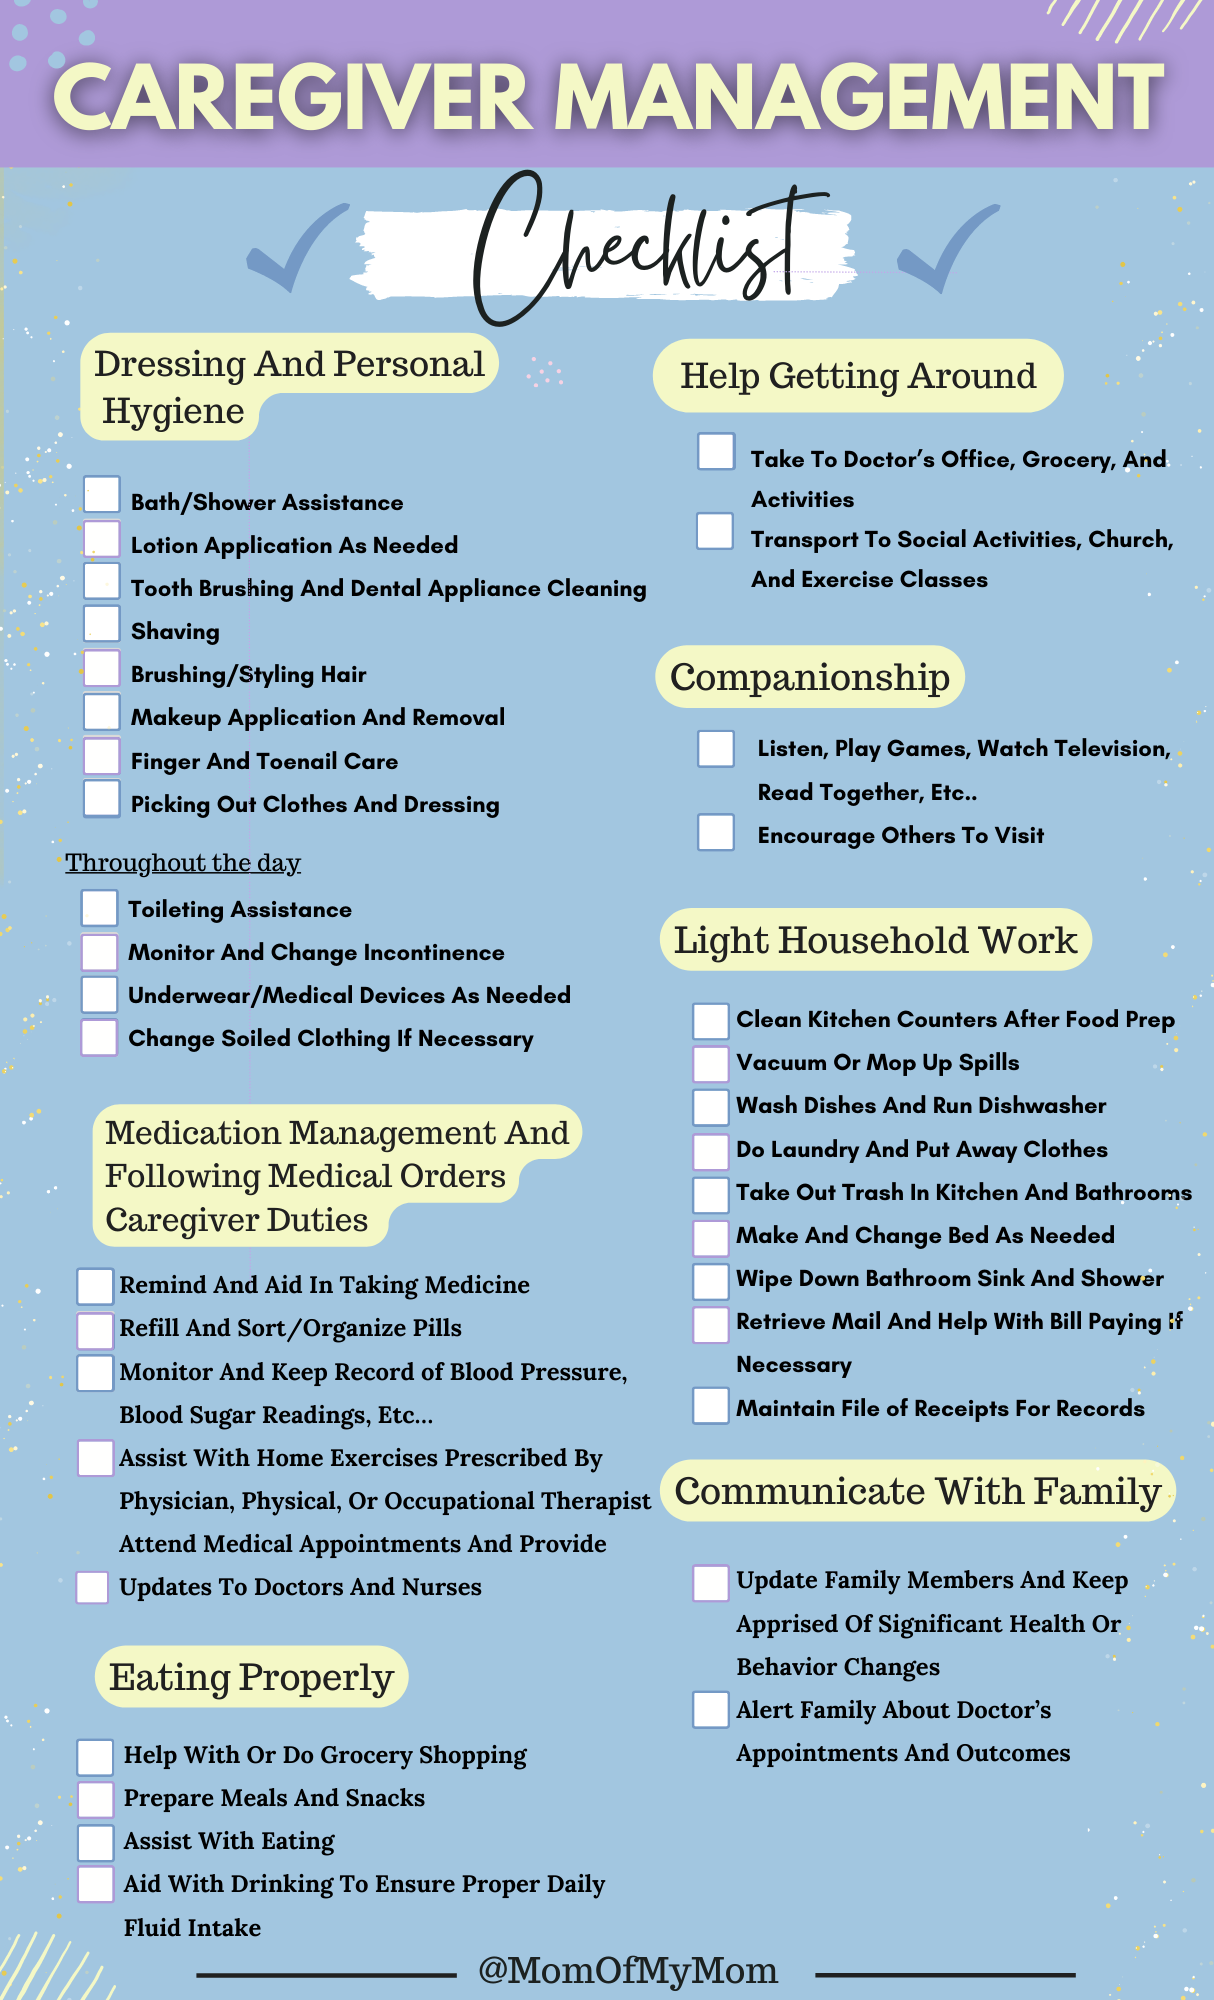 Caregiver Duties Checklist!